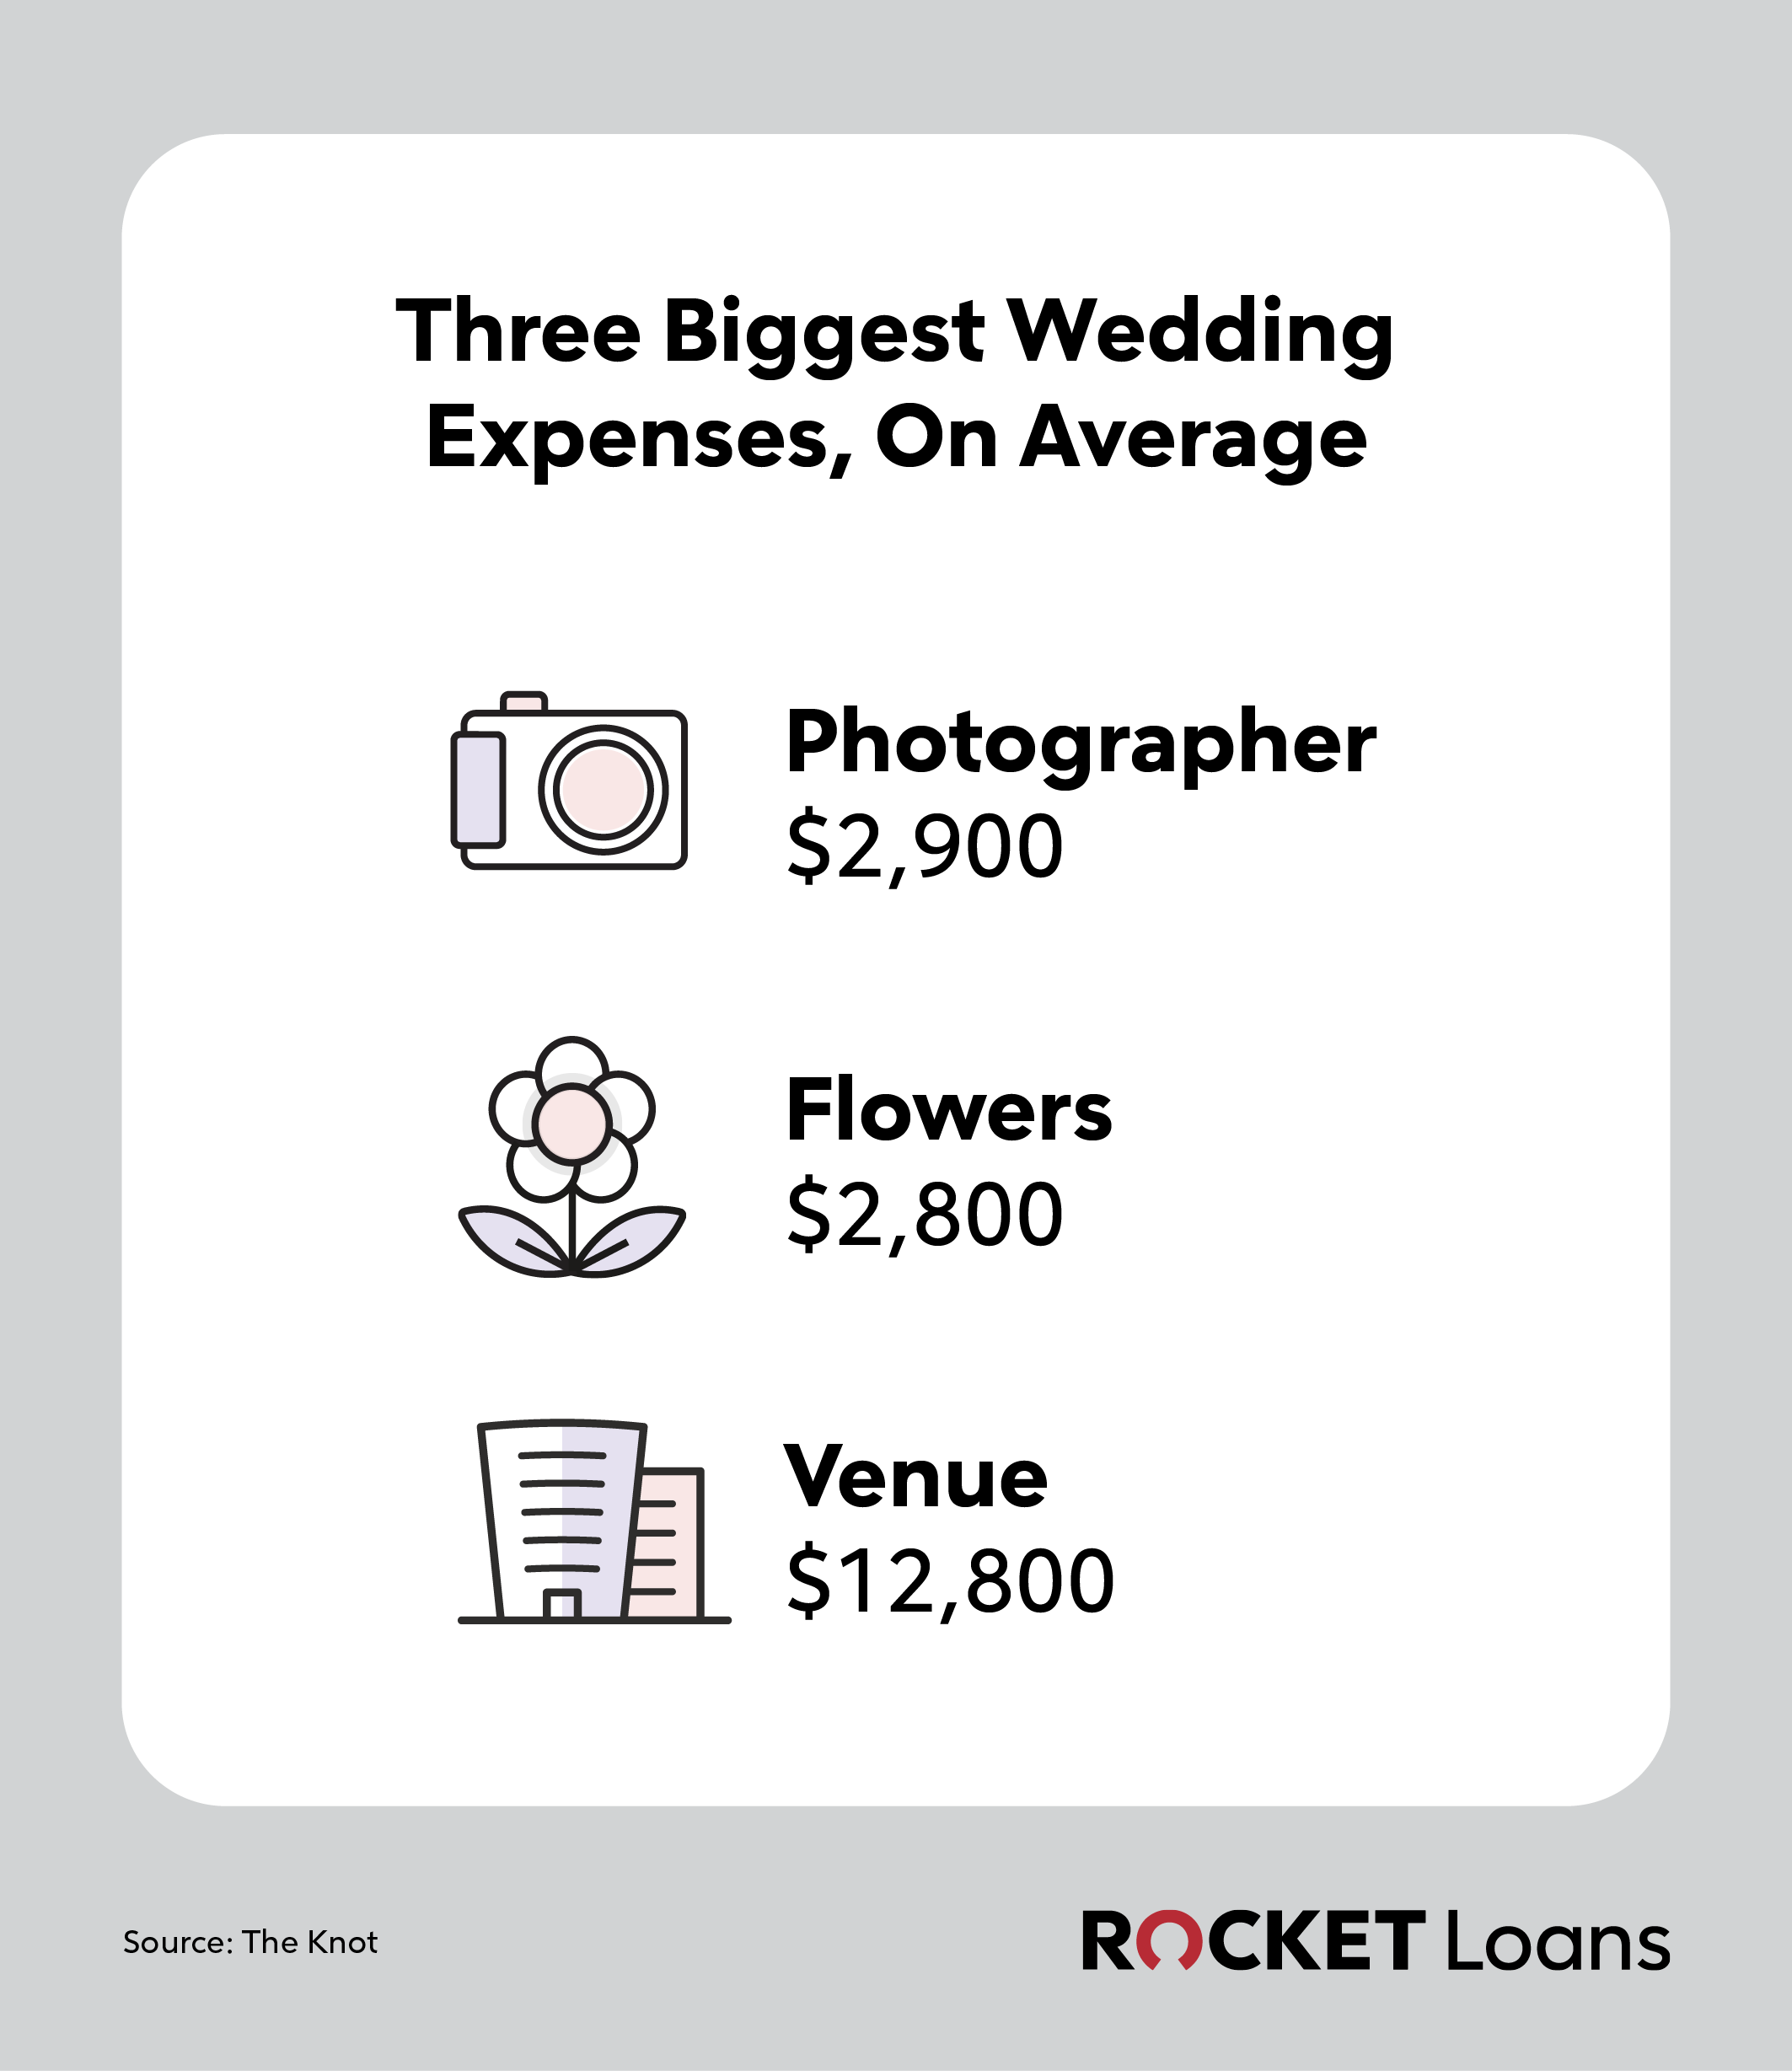 Image showing the three biggest wedding expenses, on average.